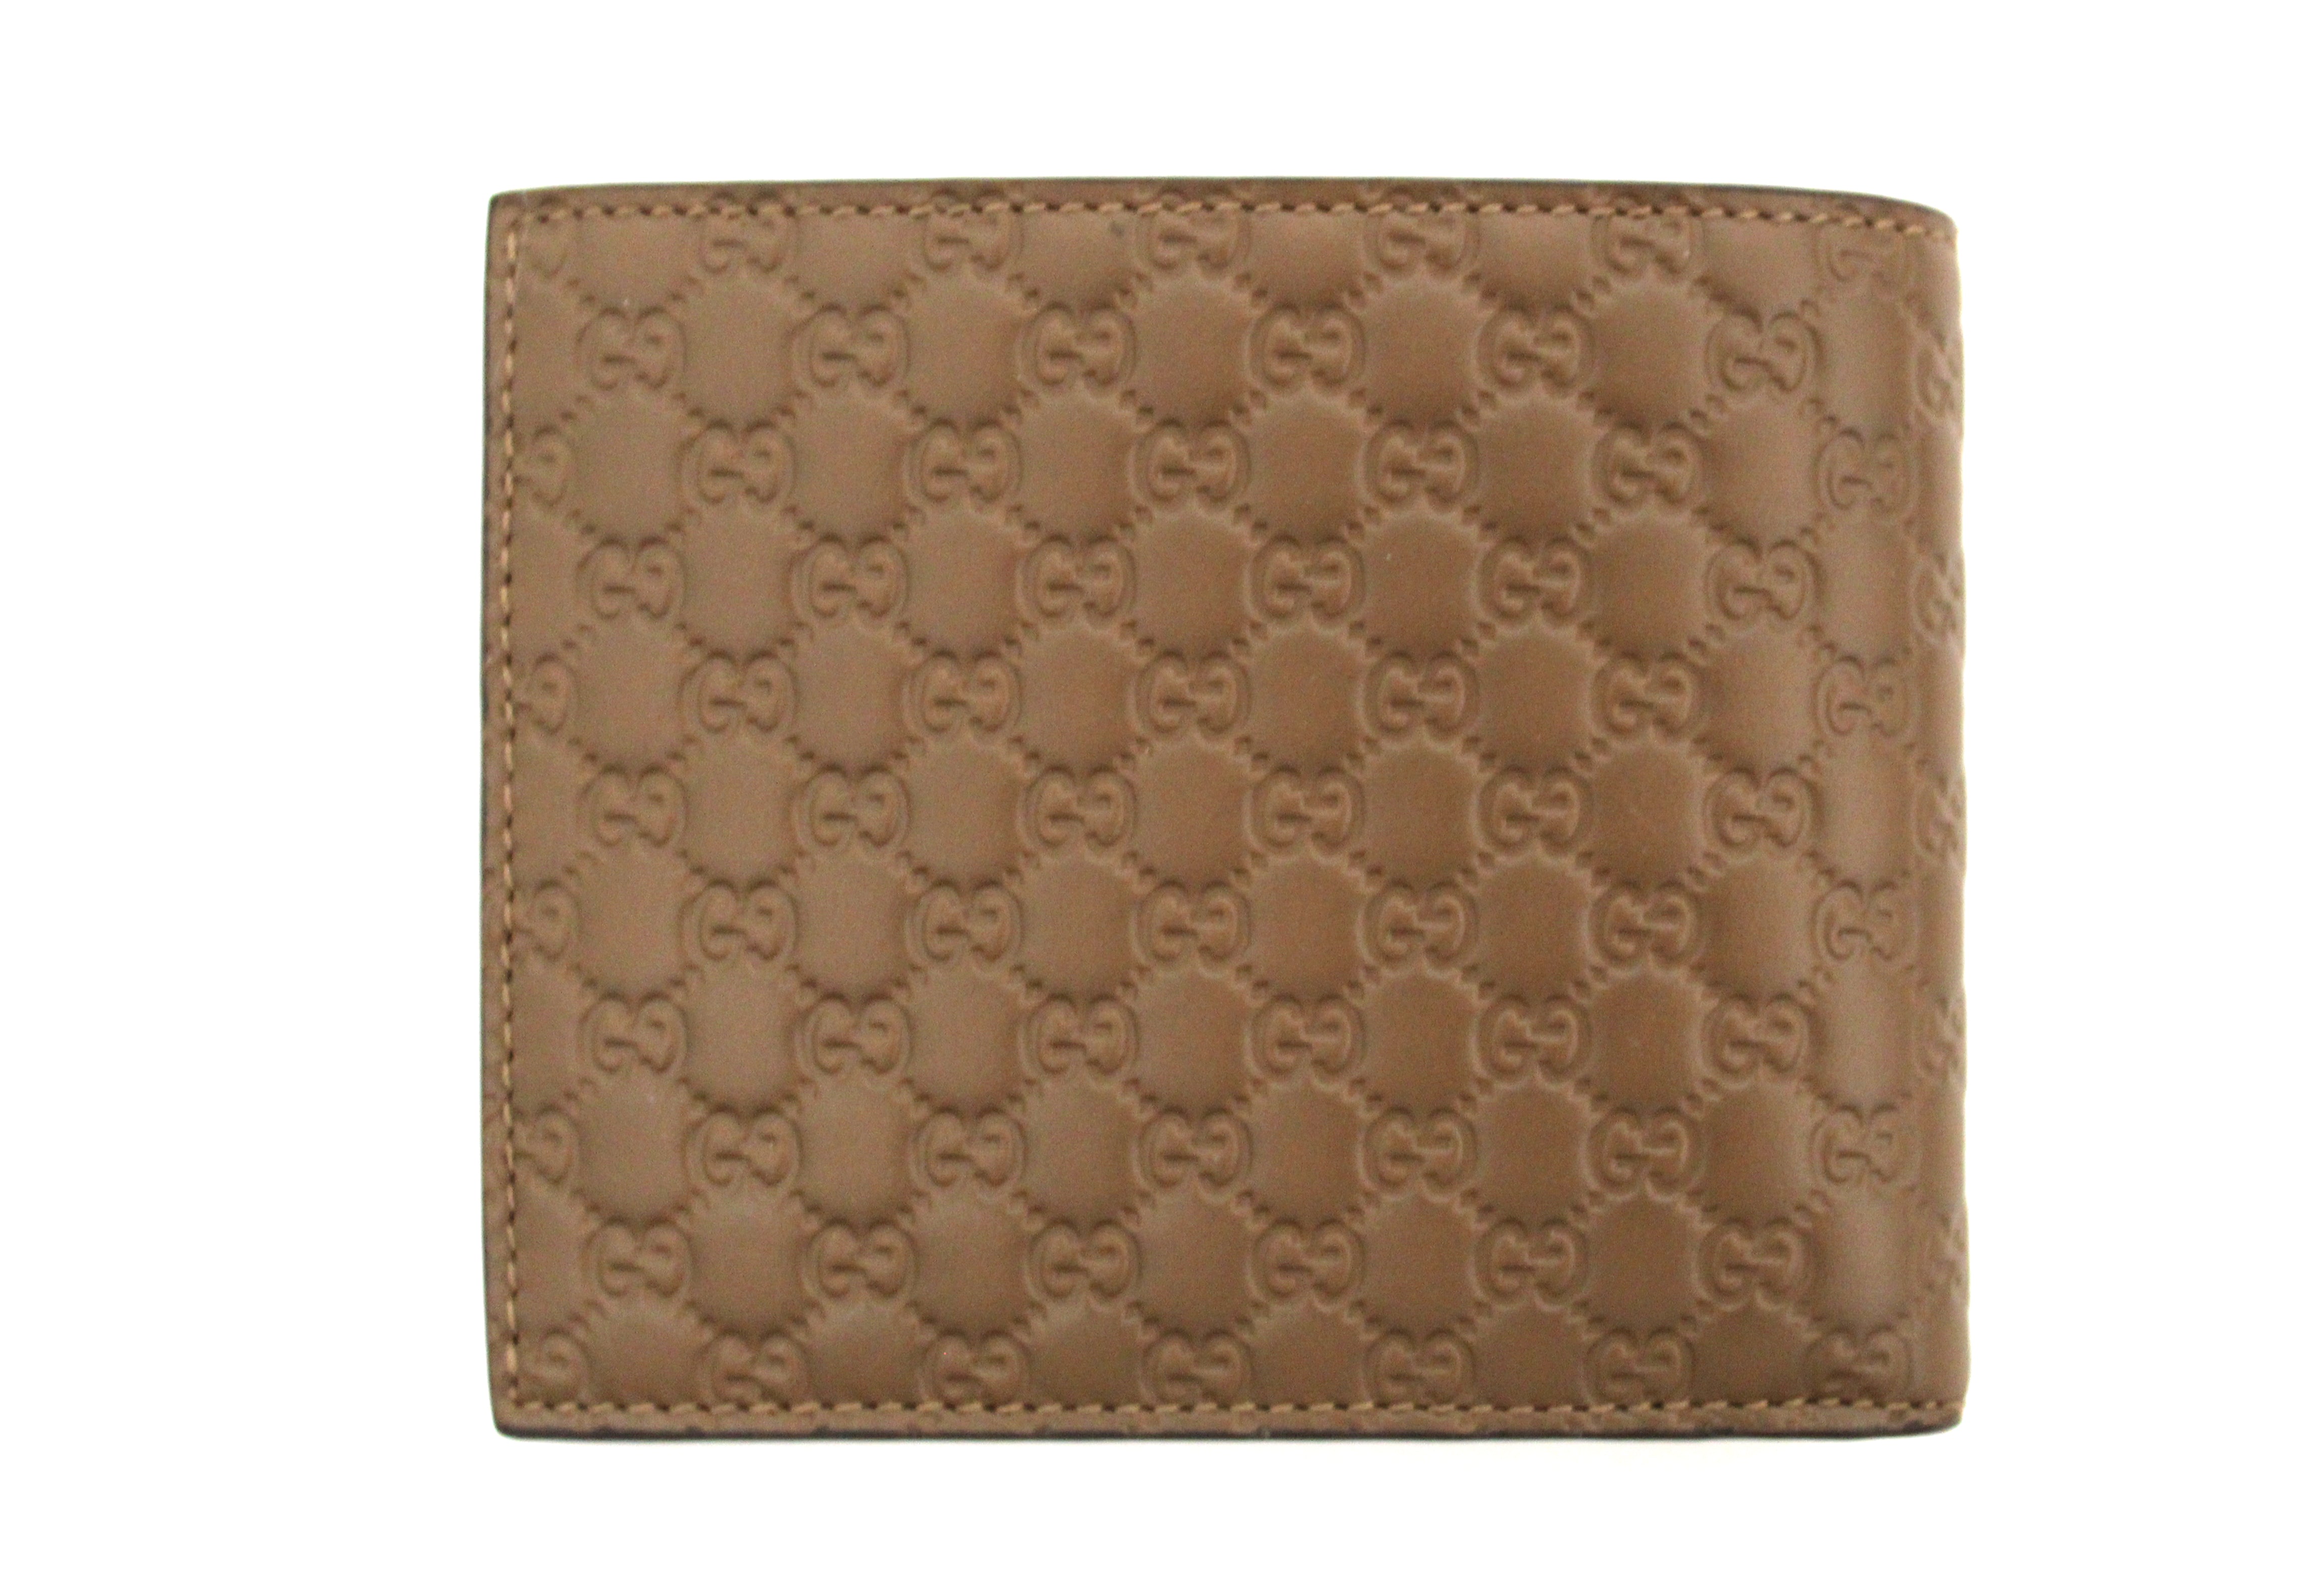 Gucci Bi-Fold Leather Long Wallet